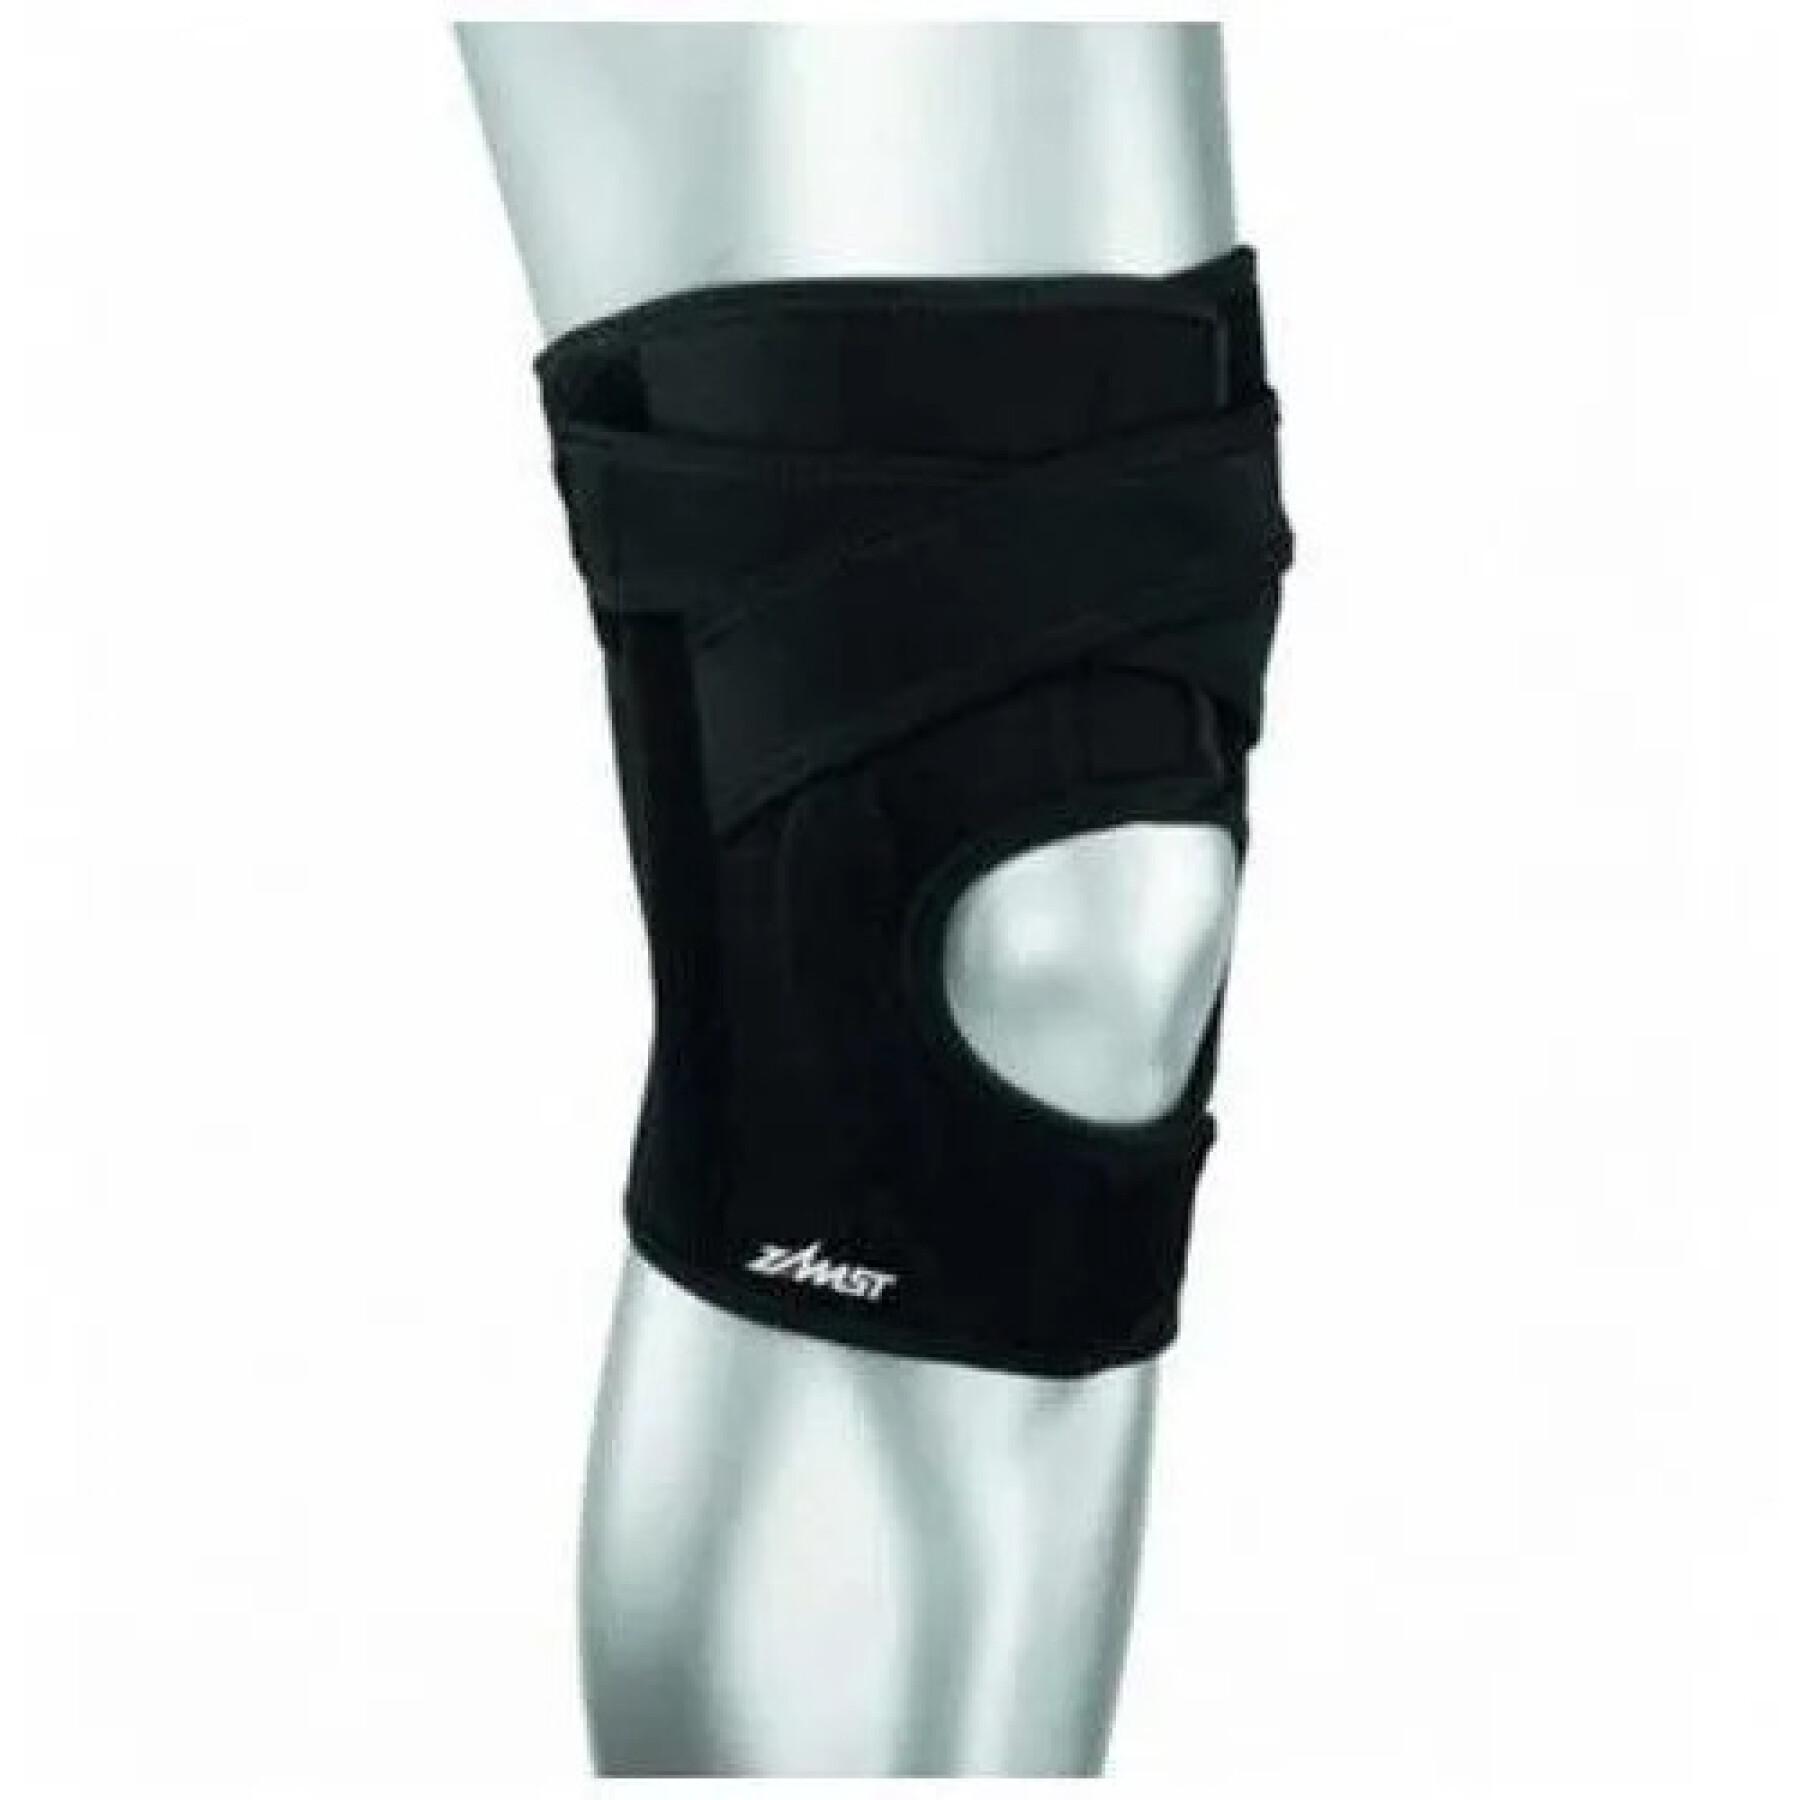 Tutore per il ginocchio Zamst Knee Support EK-5